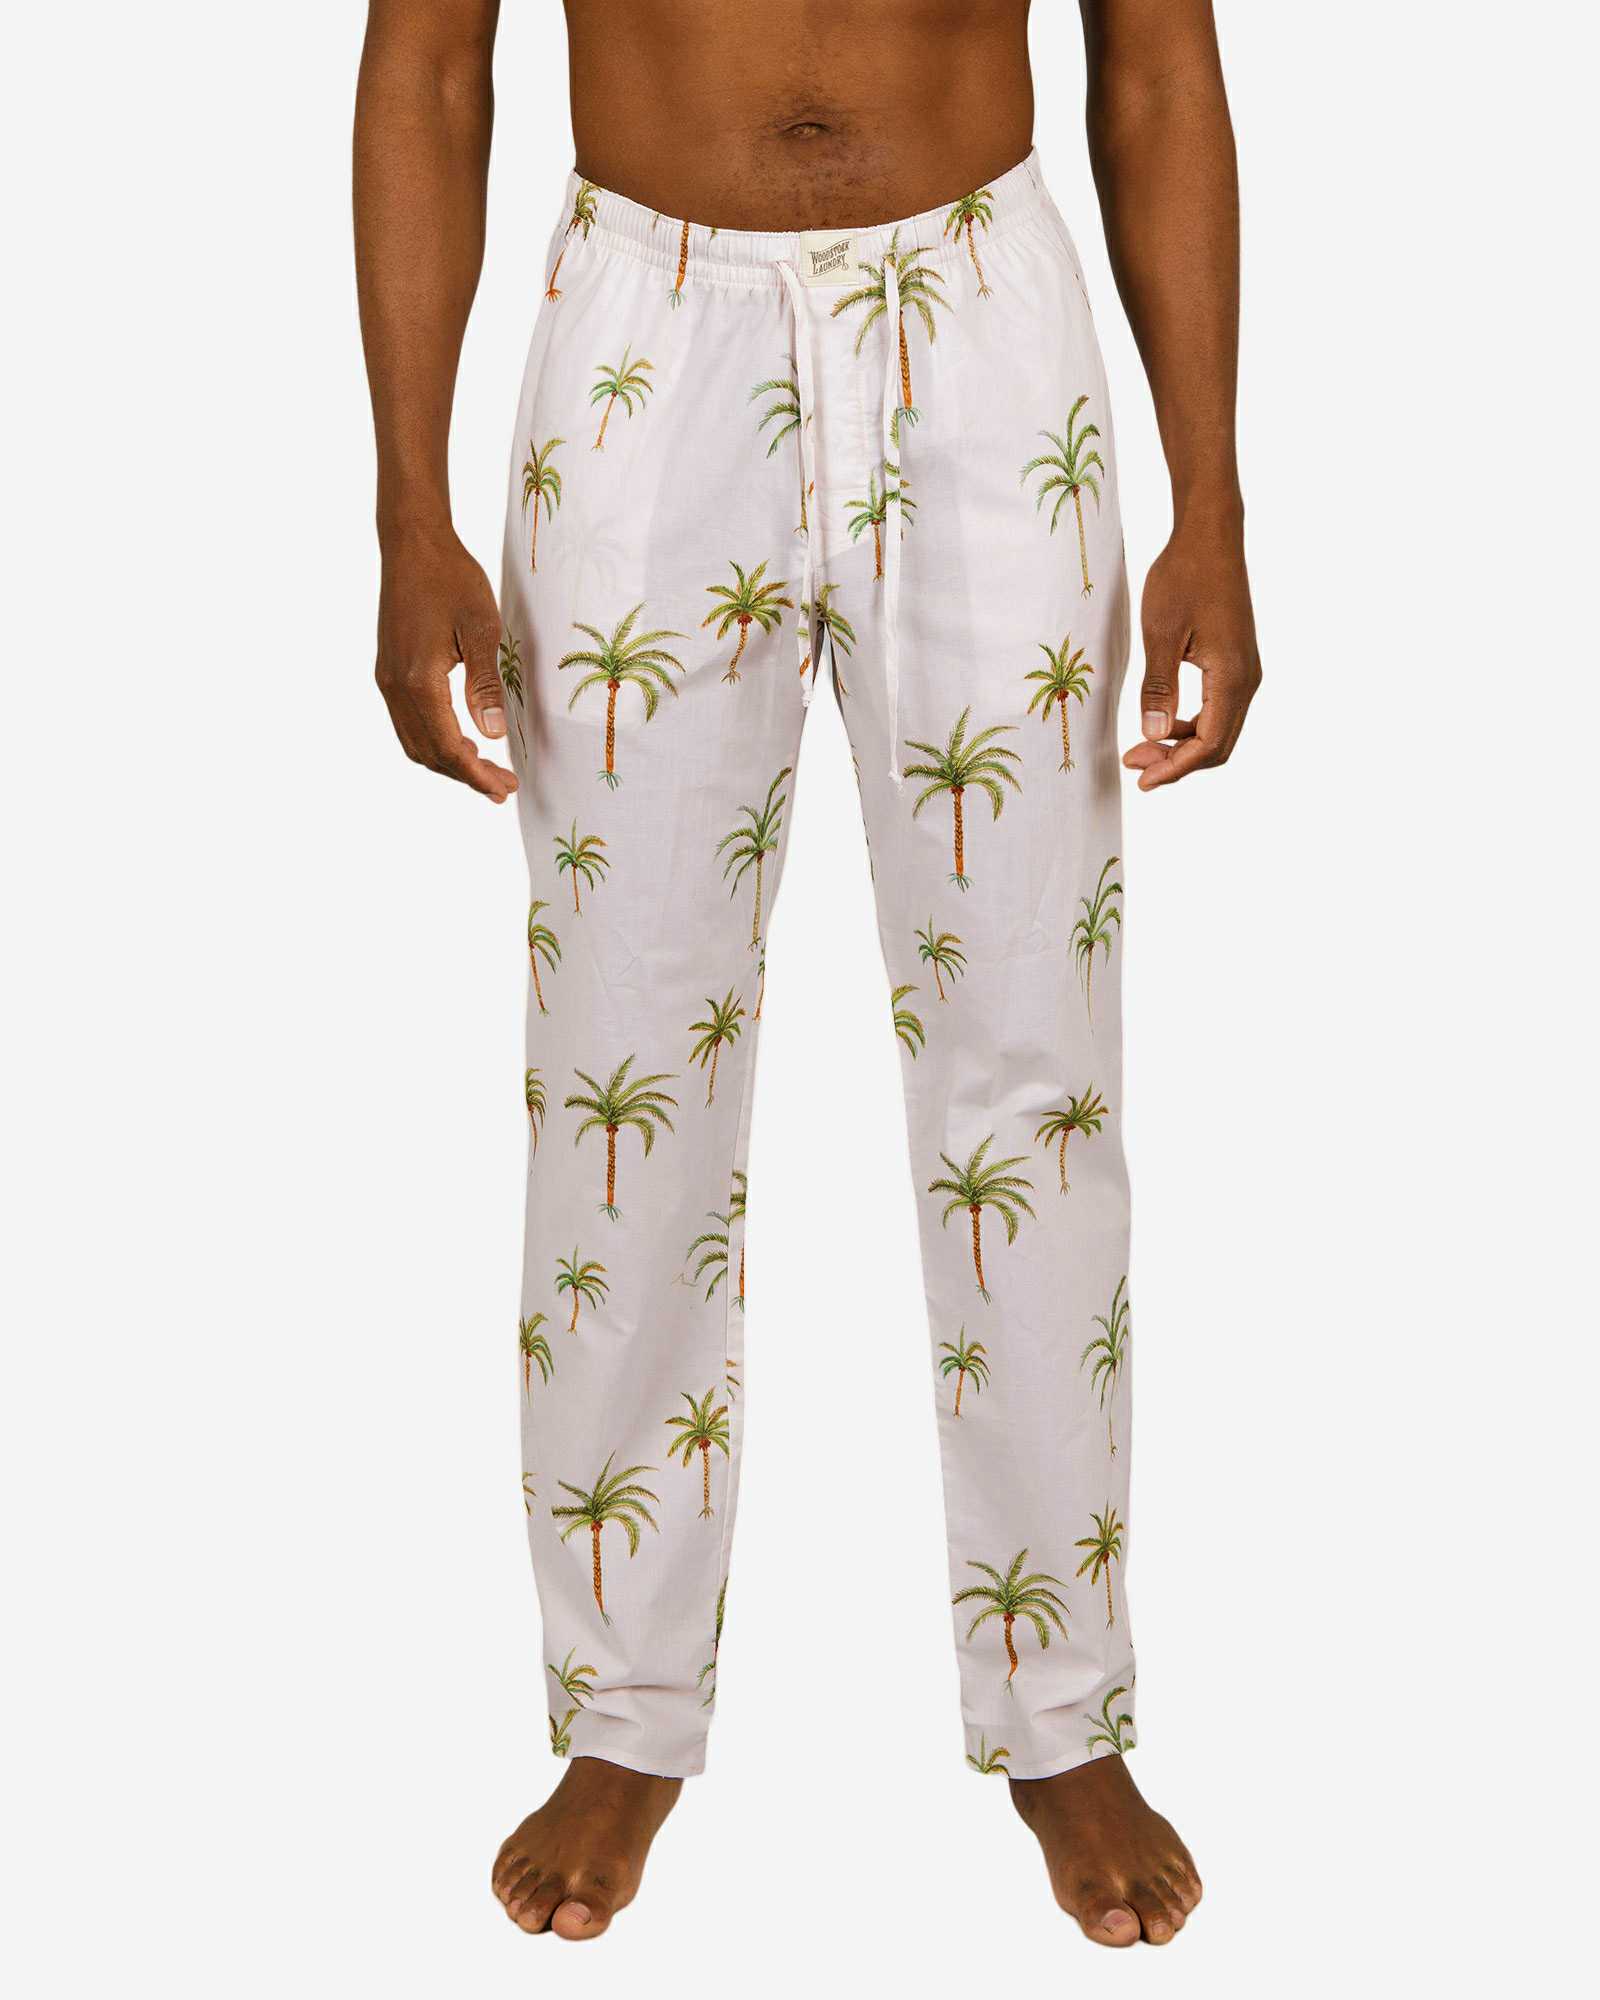 Barbados Lounge Pants | Men's Lounge Pants in Cotton Voile & Lace